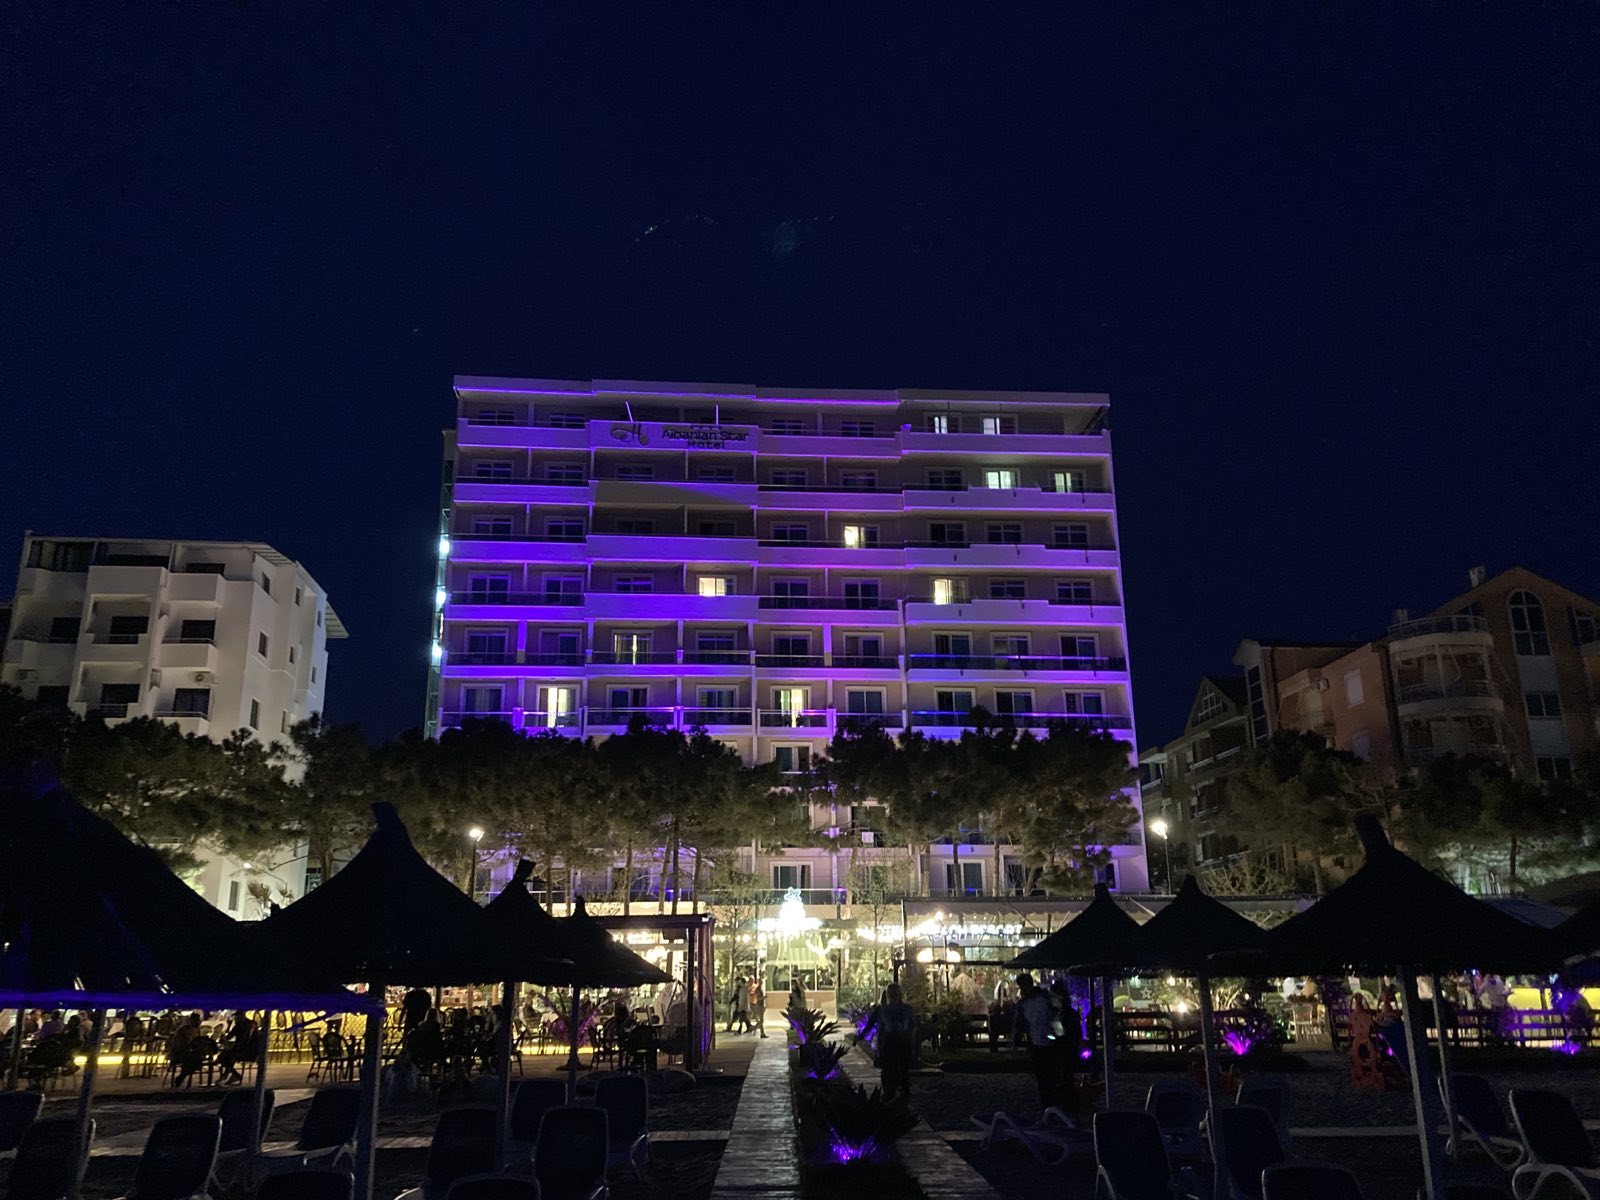 Letovanje Albanija, Hoteli Albanija,Hoteli Drač, Albanian Star